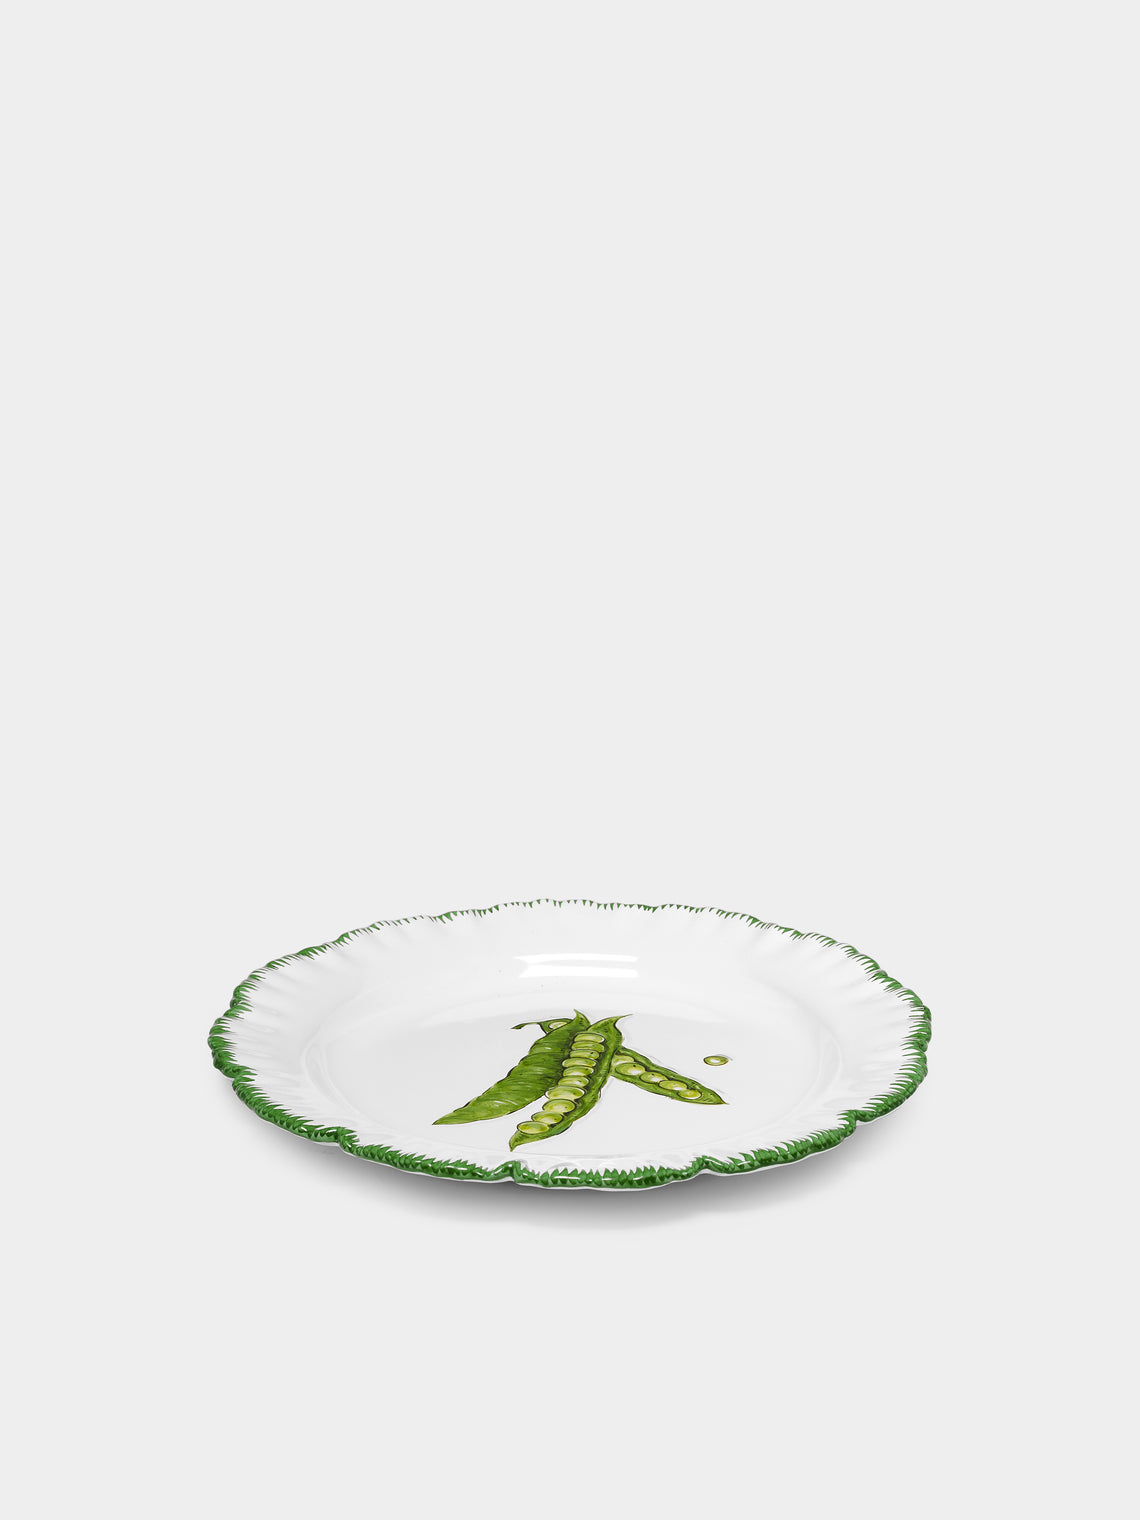 Atelier Soleil - Vegetable Garden Peas Hand-Painted Ceramic Side Plate -  - ABASK